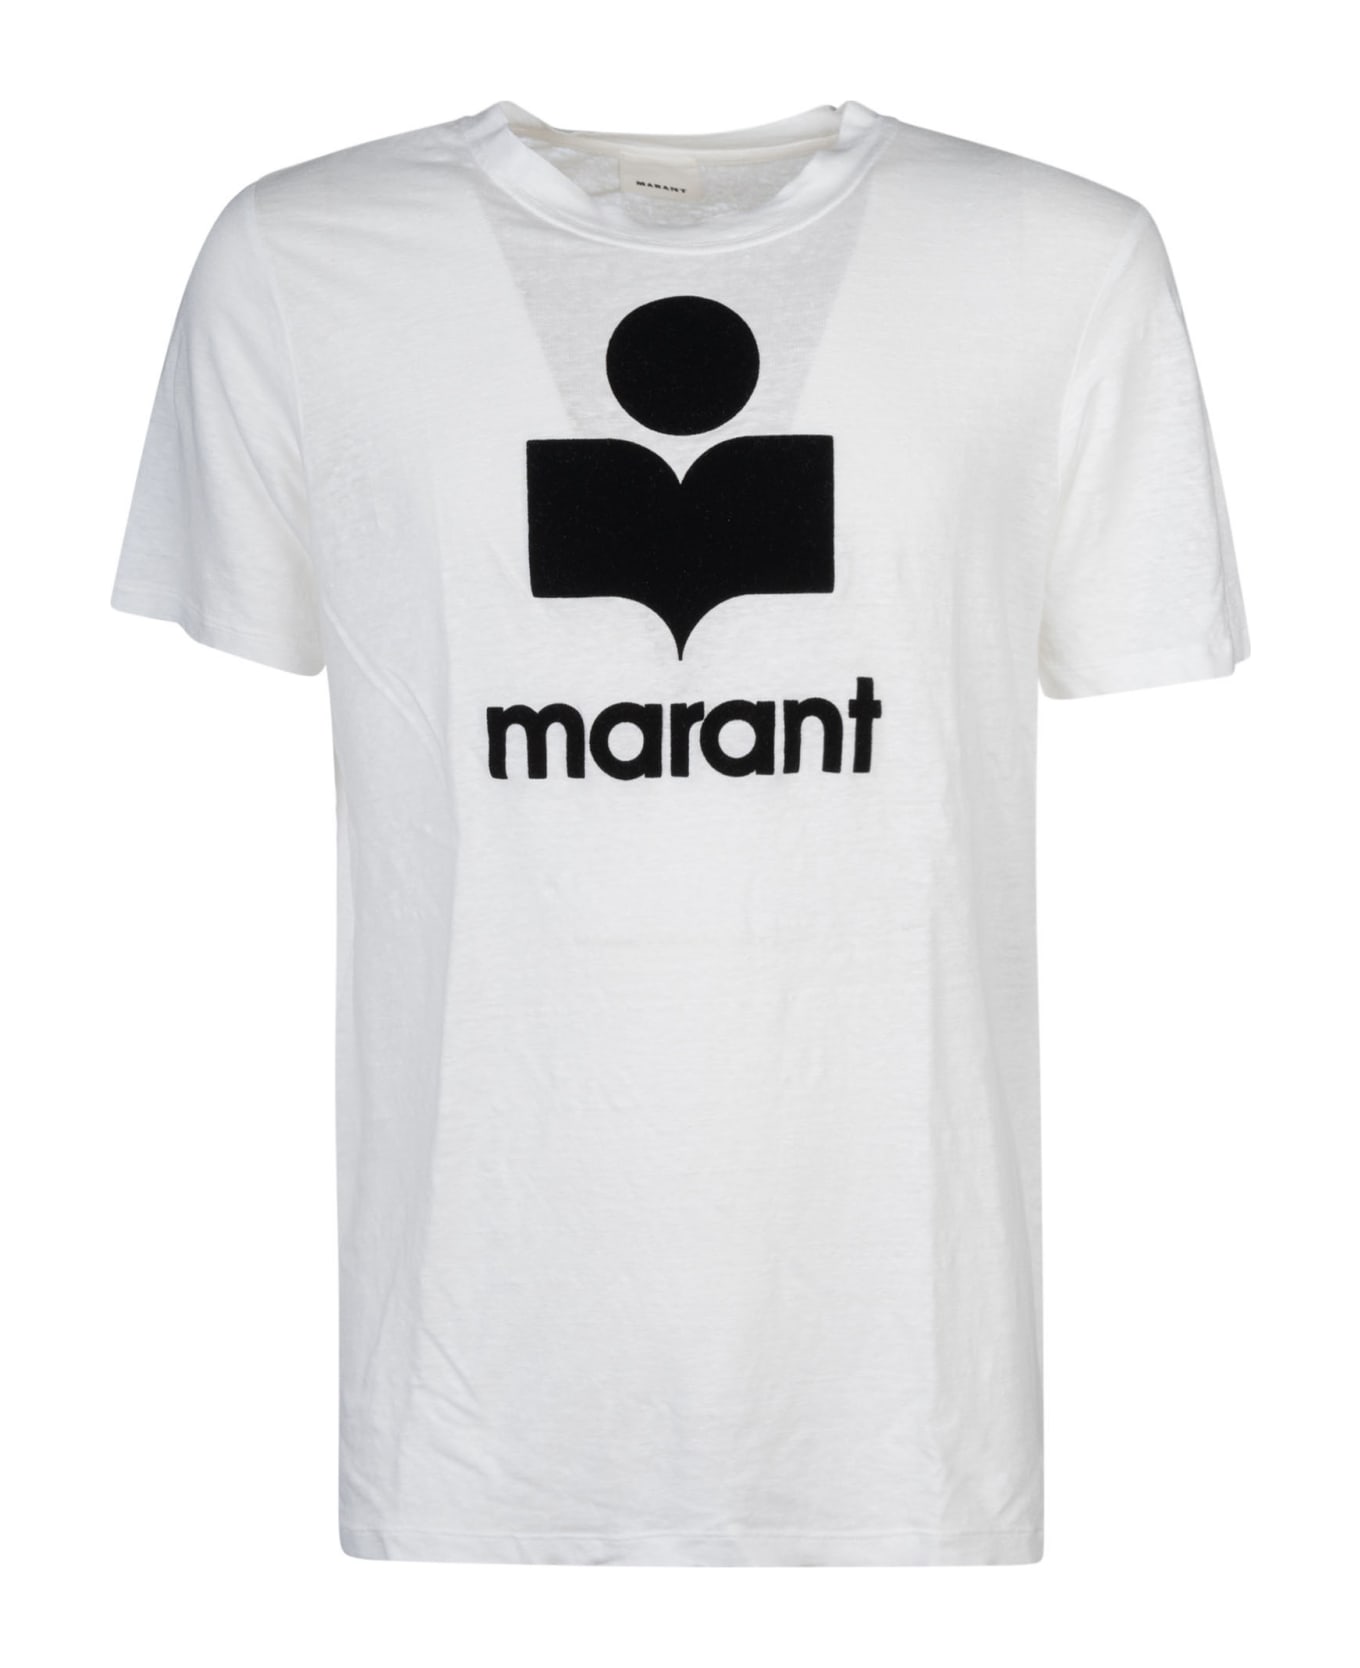 Isabel Marant Karman T-shirt - White シャツ